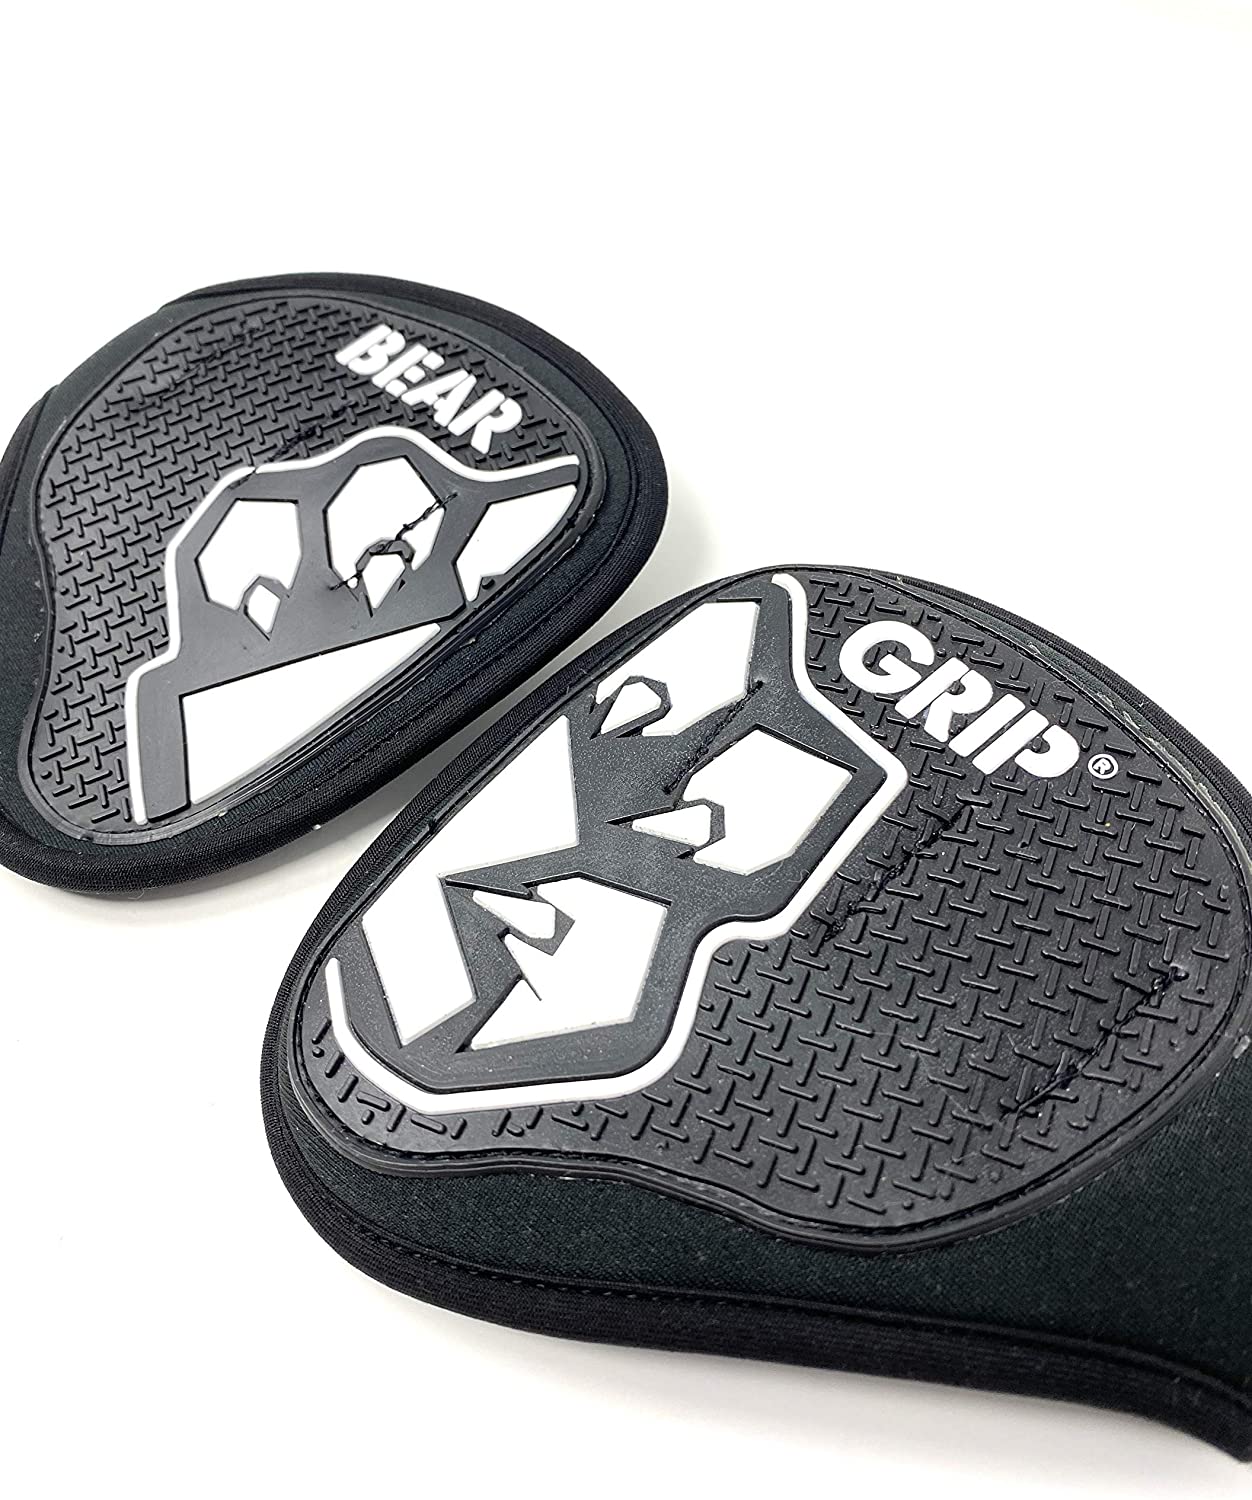 Bear Grip® (Neoprene) Hygienic Alternative To Weight Lifting Gloves